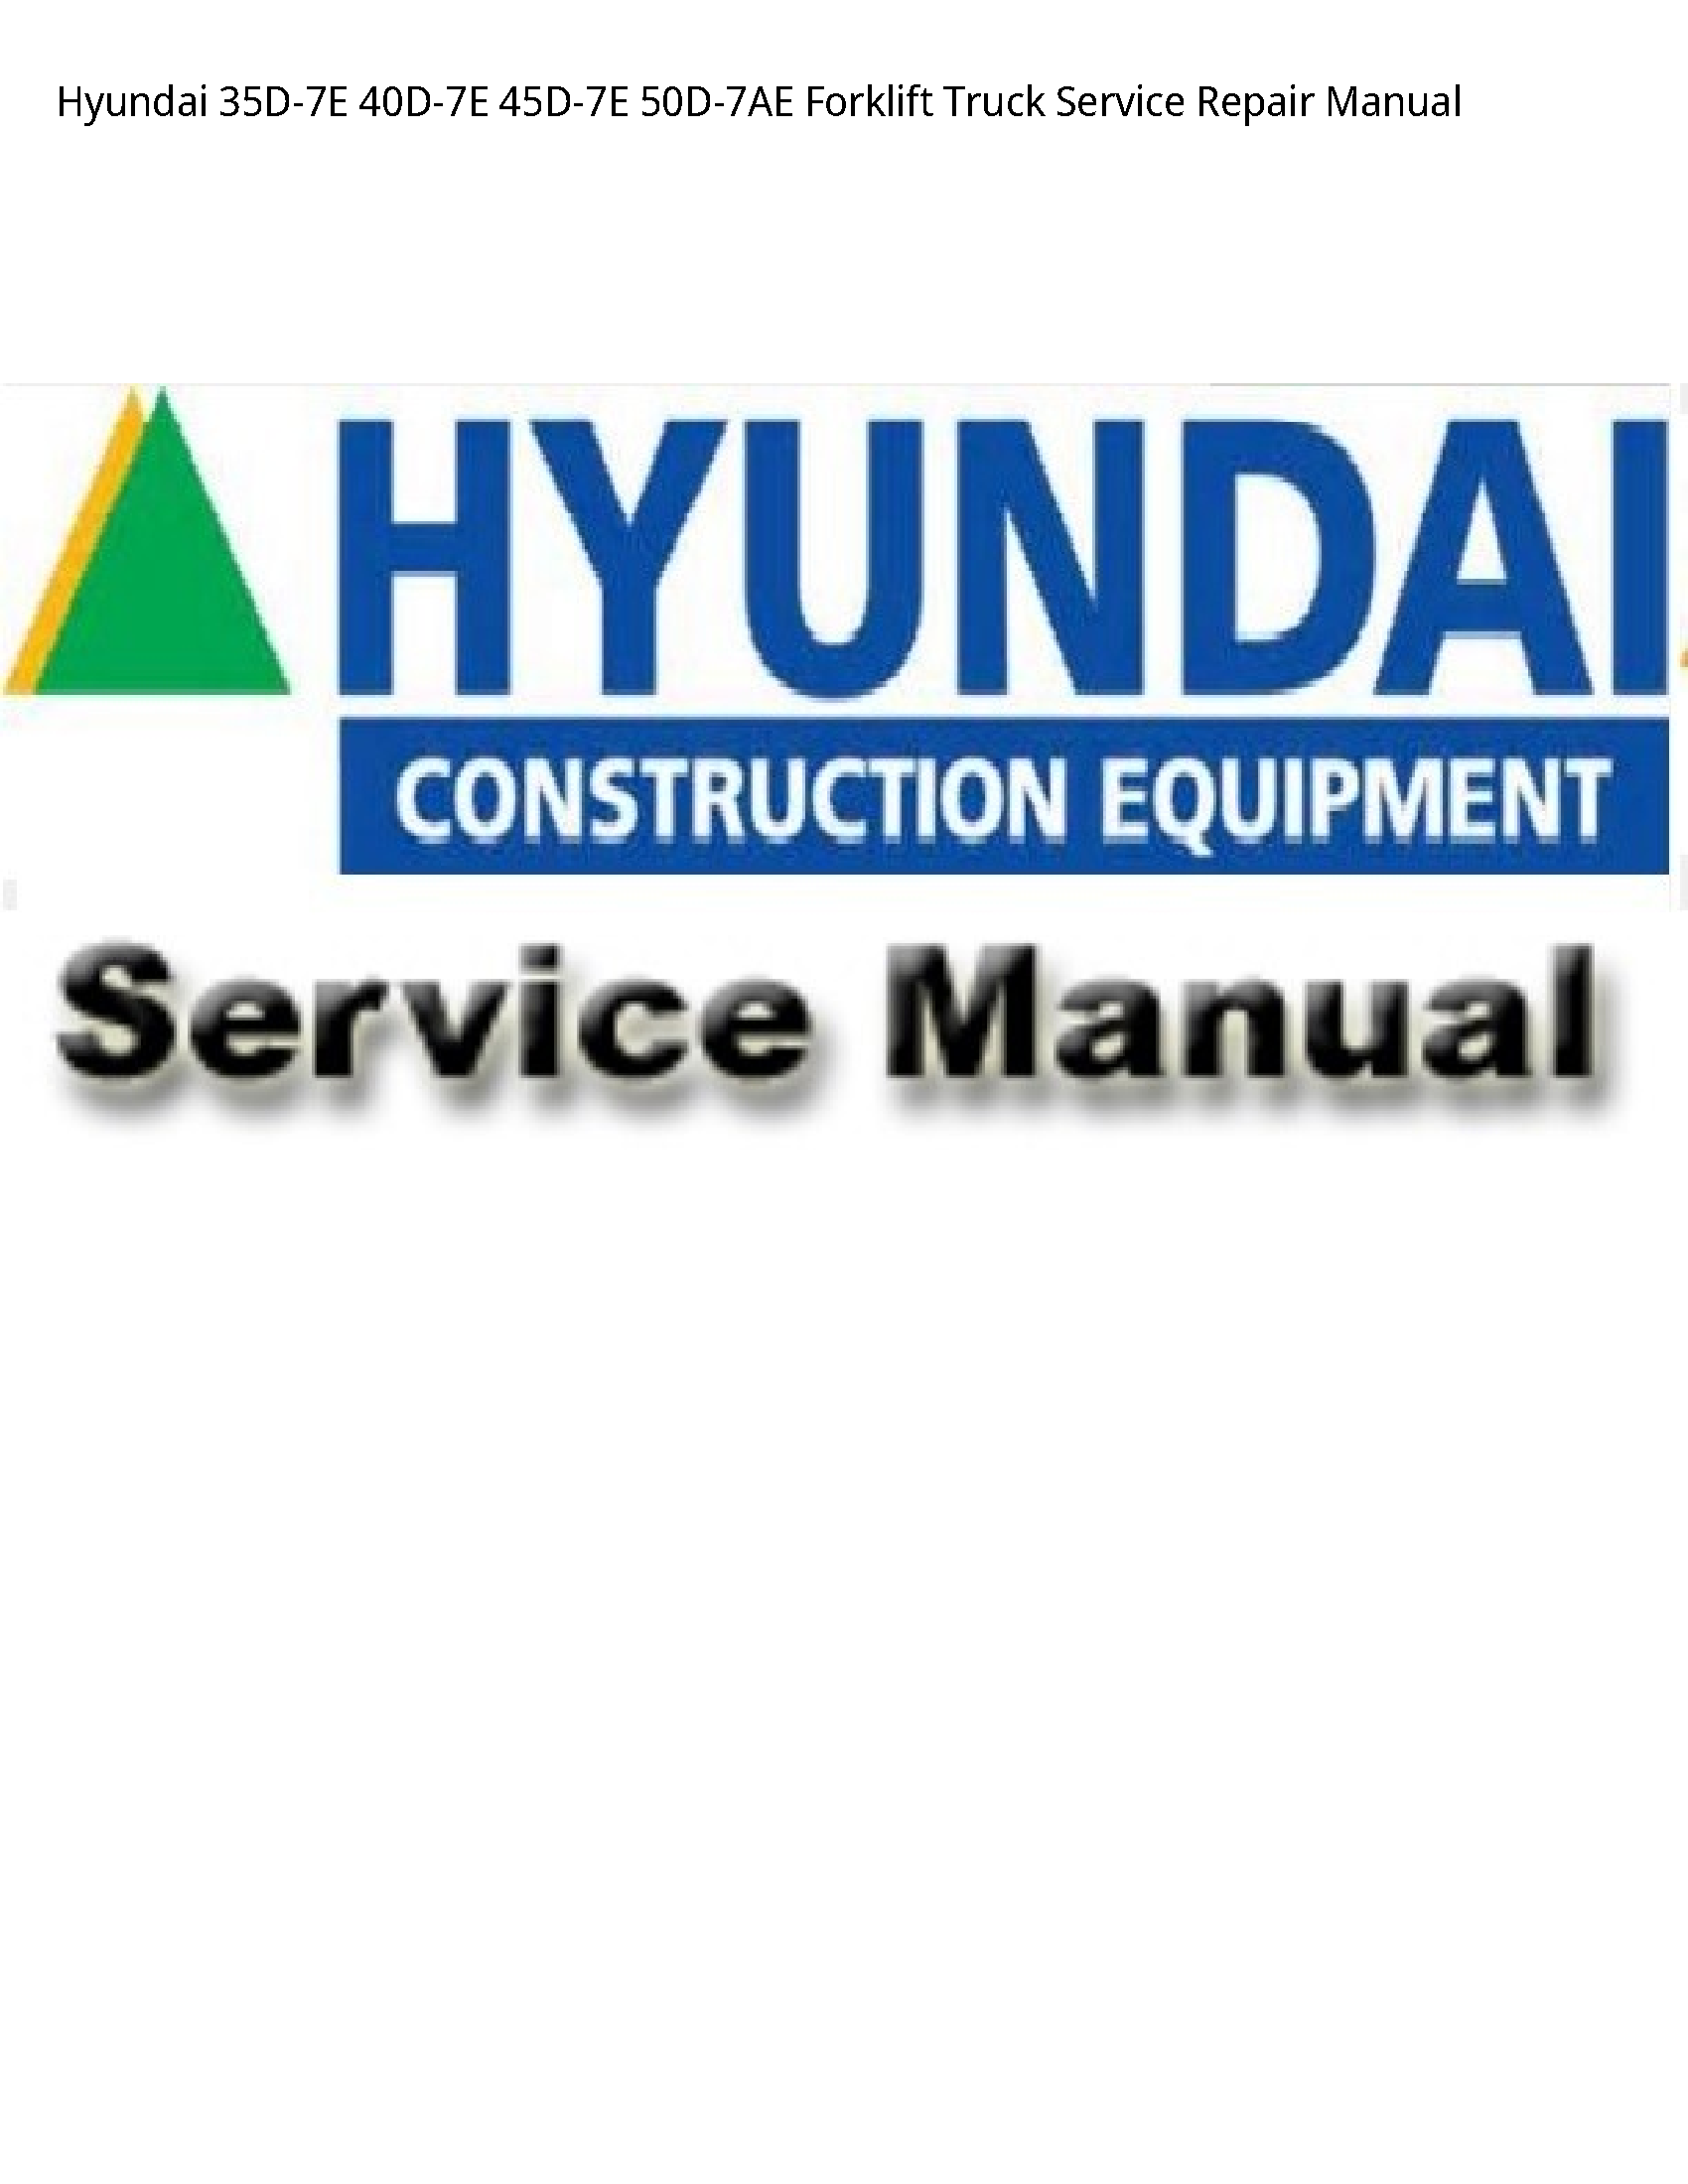 Hyundai 35D-7E Forklift Truck manual